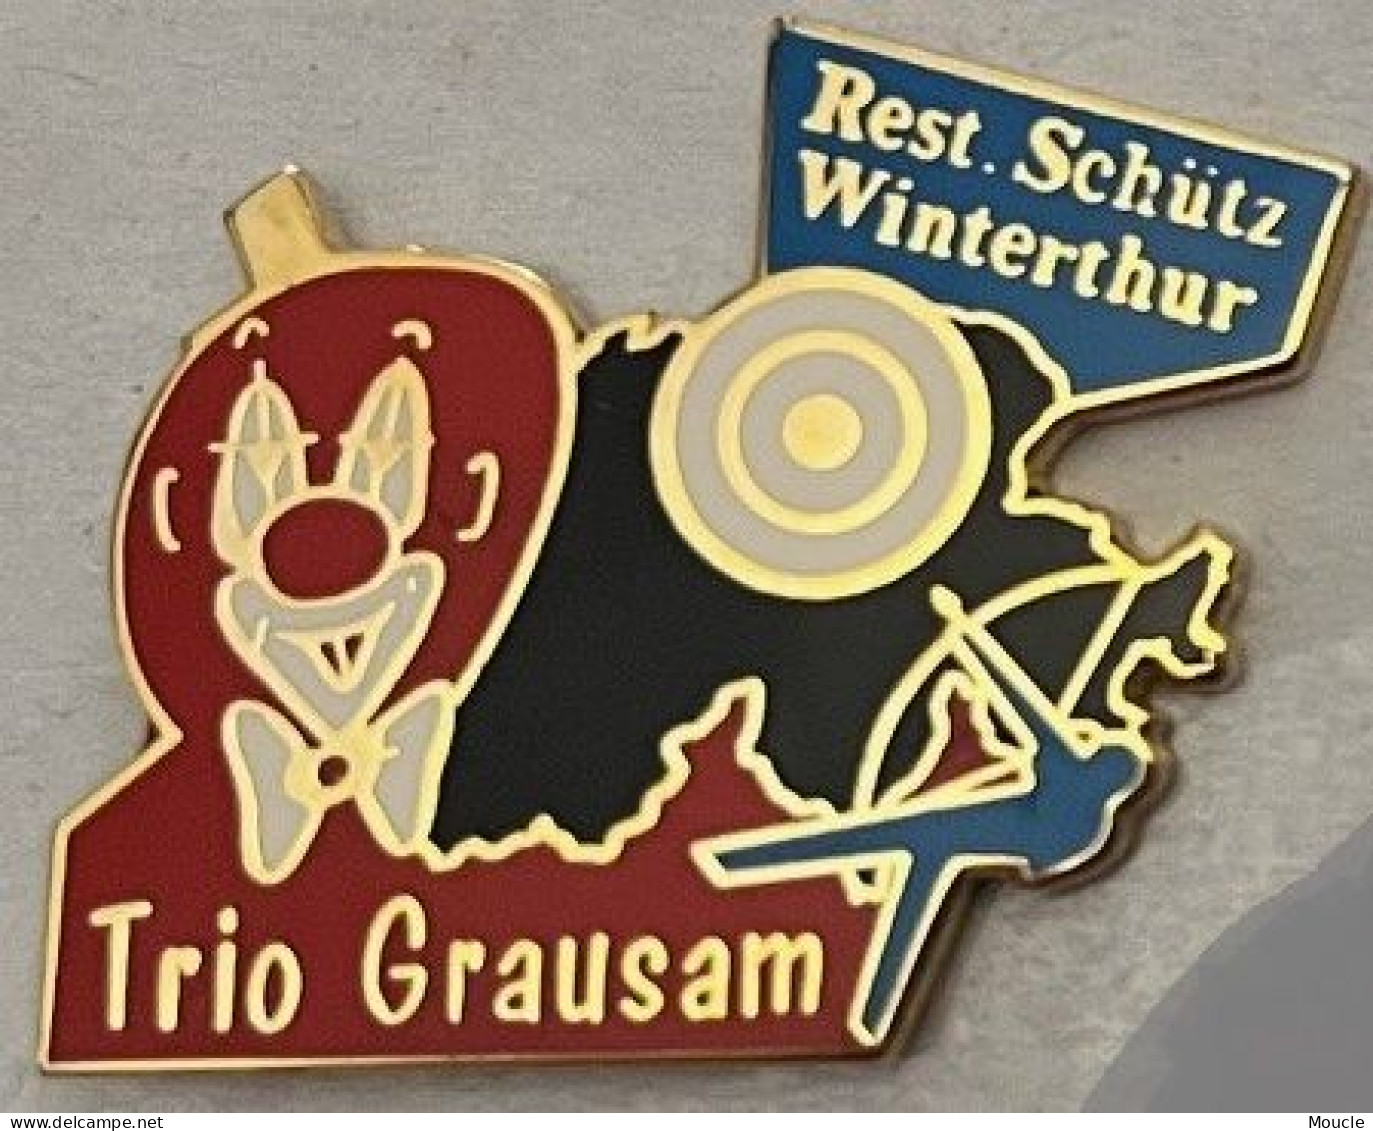 TIR A L'ARC CLUB -  TRIO GRAUSAM - CLOWN - REST. SCHÜTZ - WINTERHUR - SUISSE - SCHWEIZ - FLECHE - CIBLE -  ARCHER - (34) - Archery